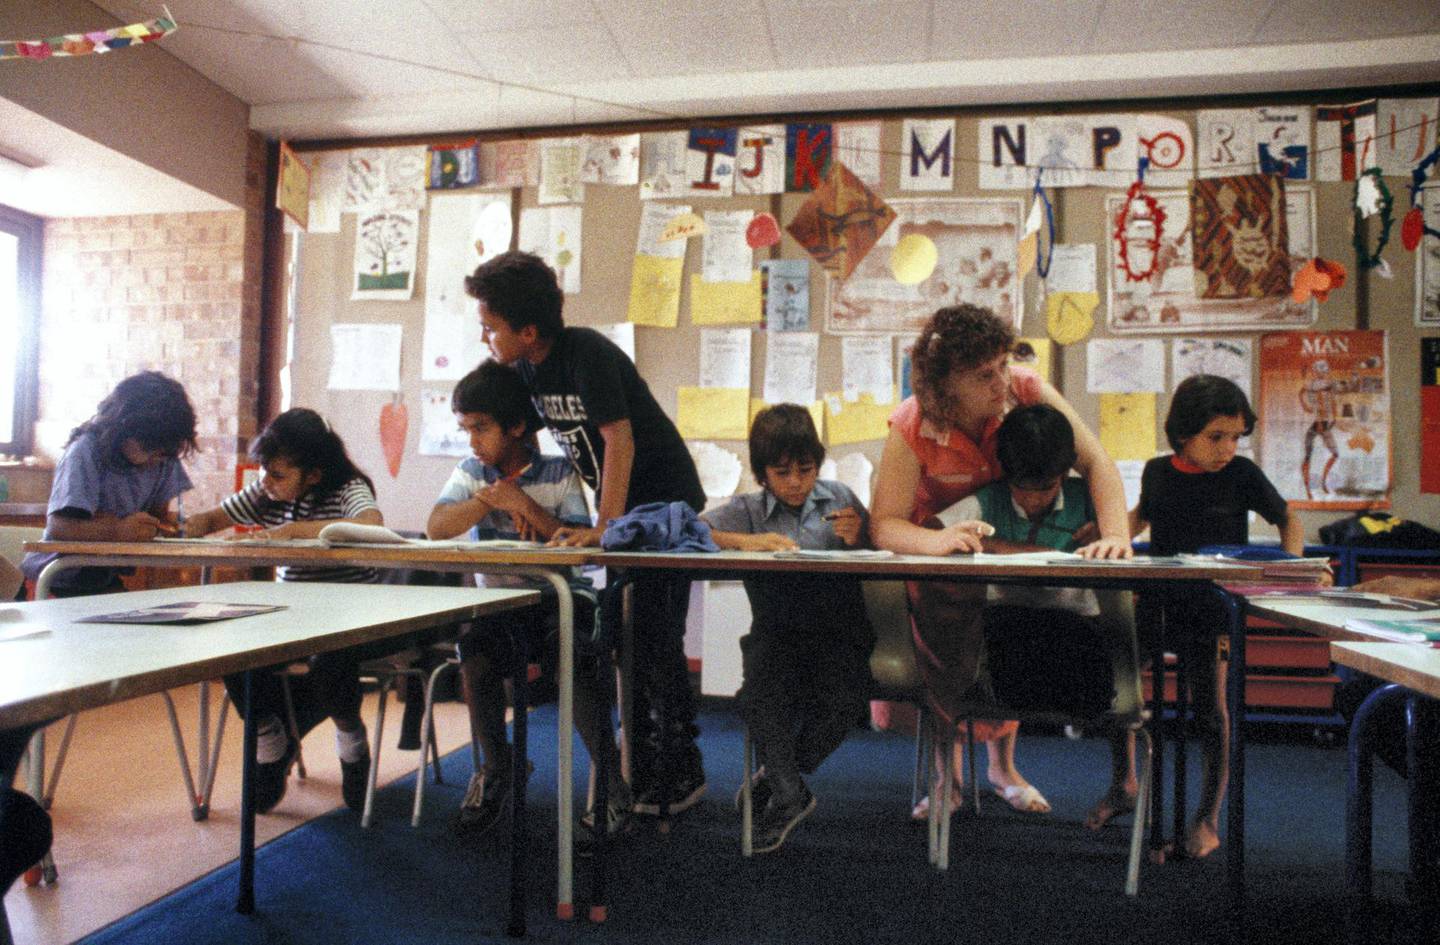 AGM7T9 Adelaide Australia Elizabeth Aboriginal School Children In Class. Image shot 2000. Exact date unknown.